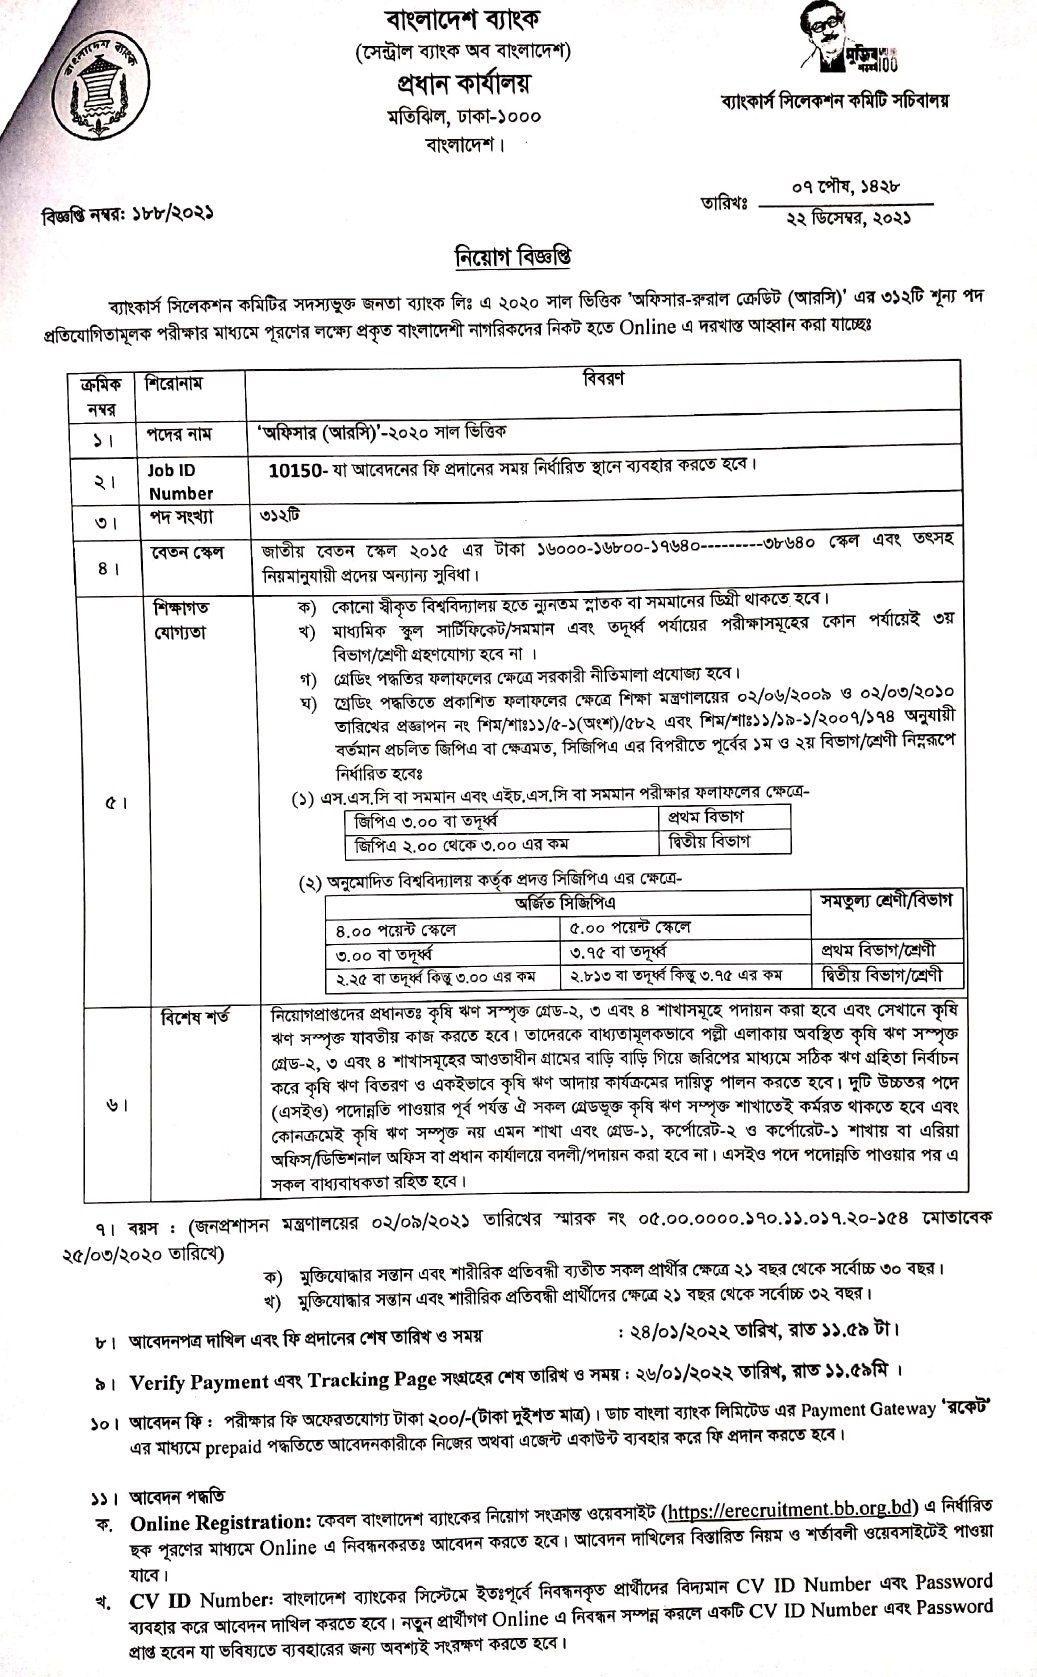 Janata Bank Job PDF & Image Download